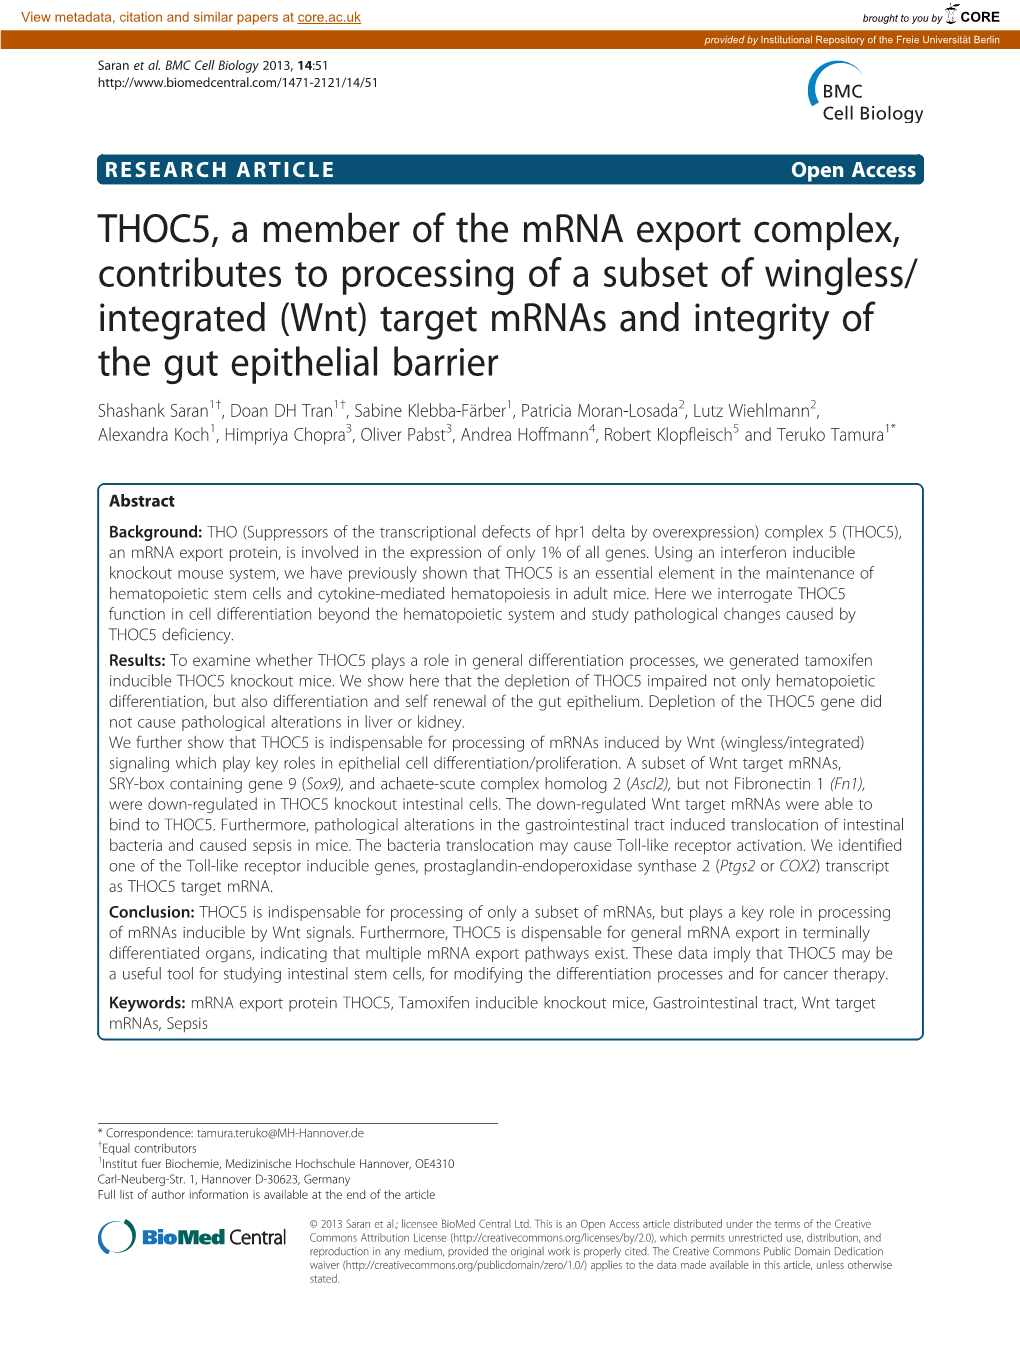 THOC5, a Member of the Mrna Export Complex, Contributes